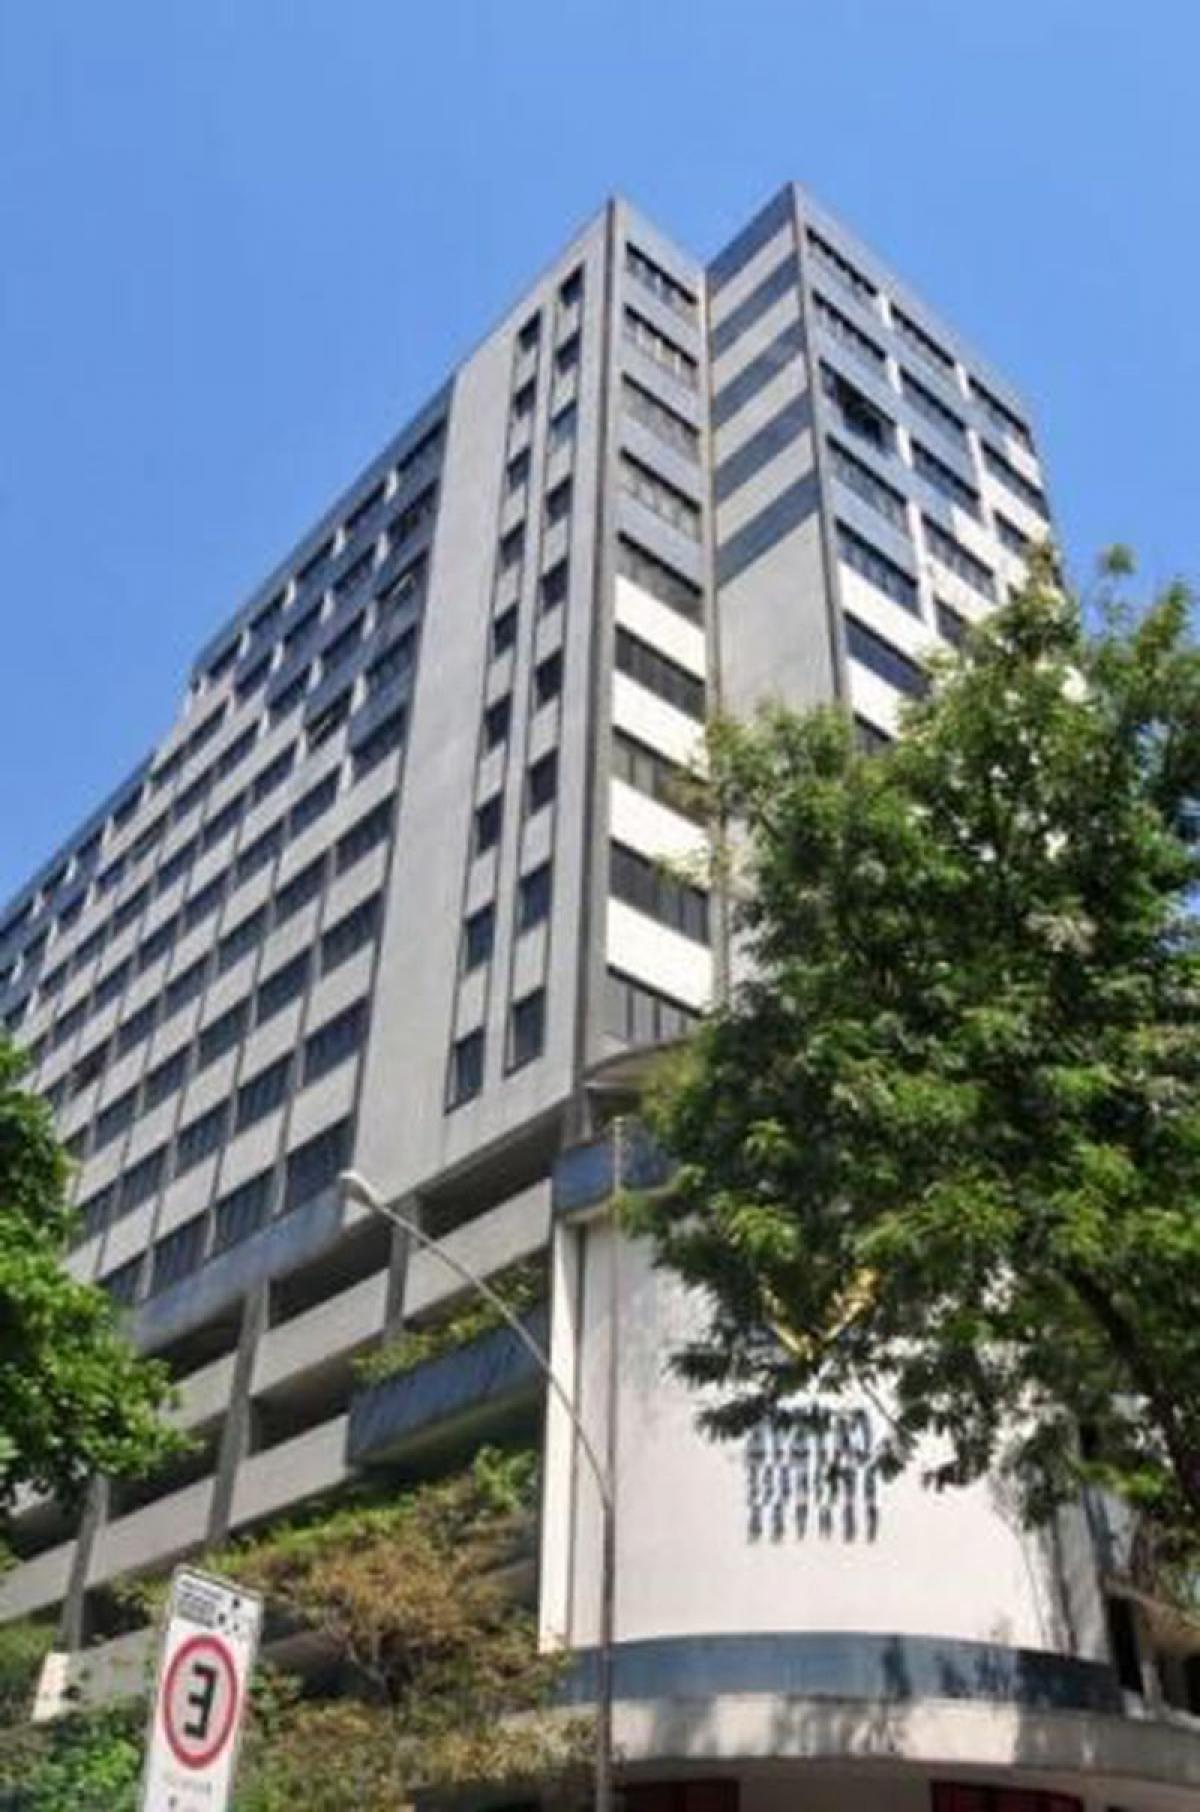 Picture of Commercial Building For Sale in Rio De Janeiro, Rio De Janeiro, Brazil